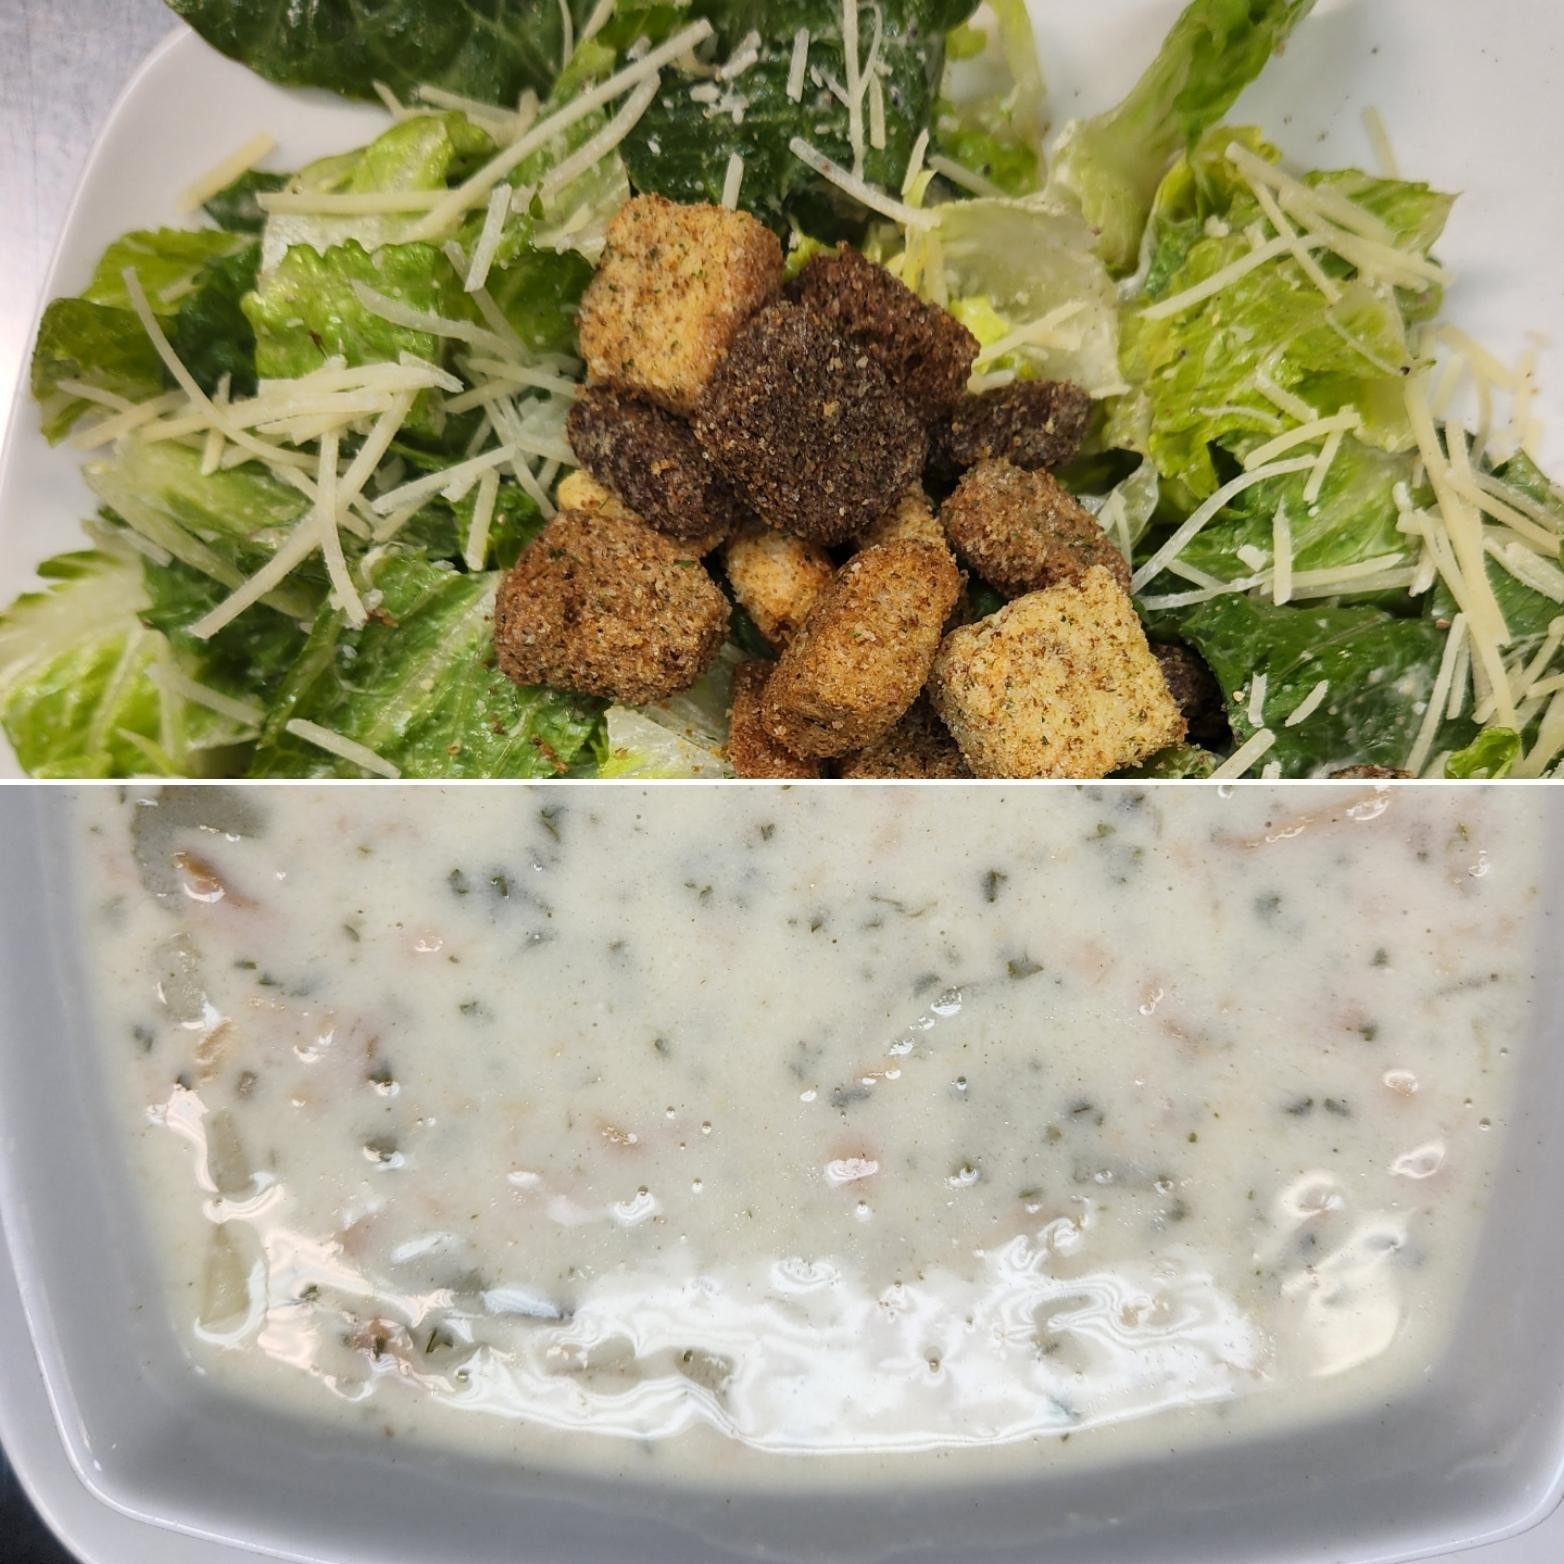 Chili/Soup/Salad/Potato Combo